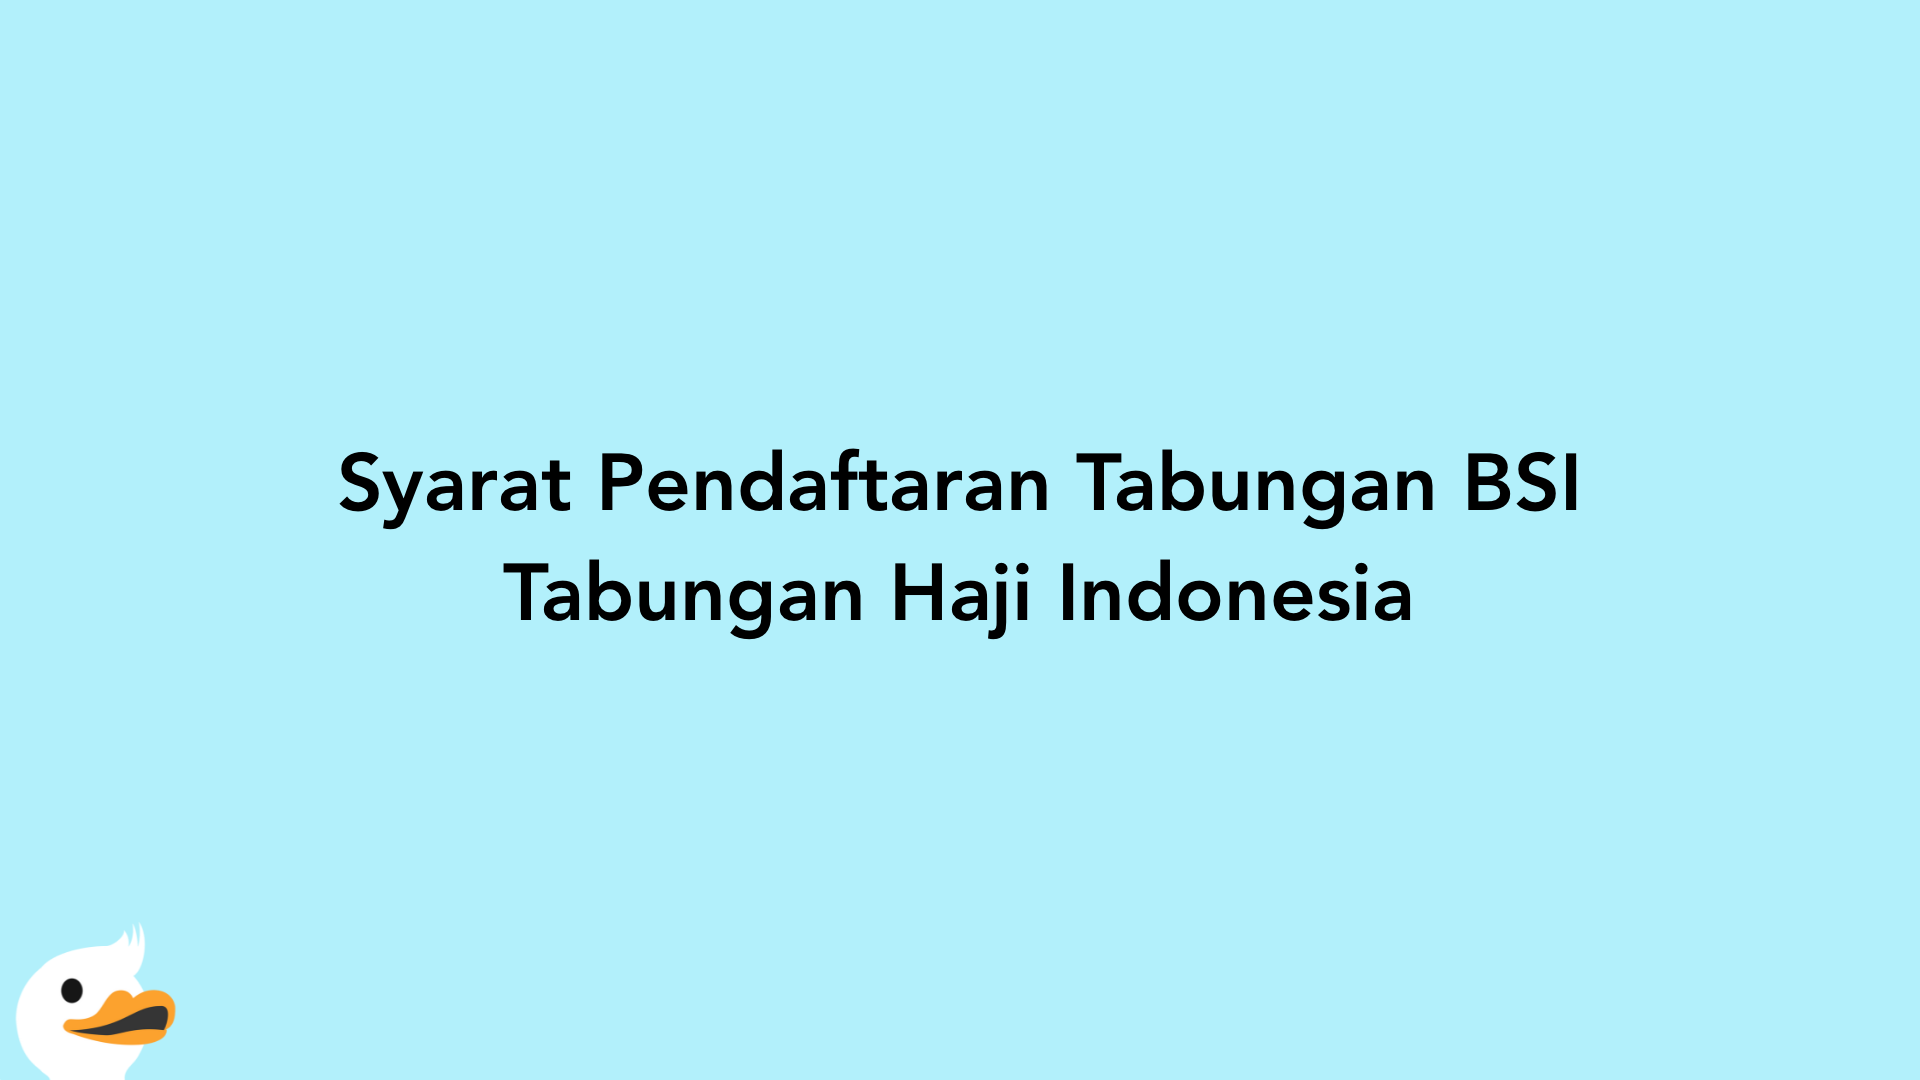 Syarat Pendaftaran Tabungan BSI Tabungan Haji Indonesia